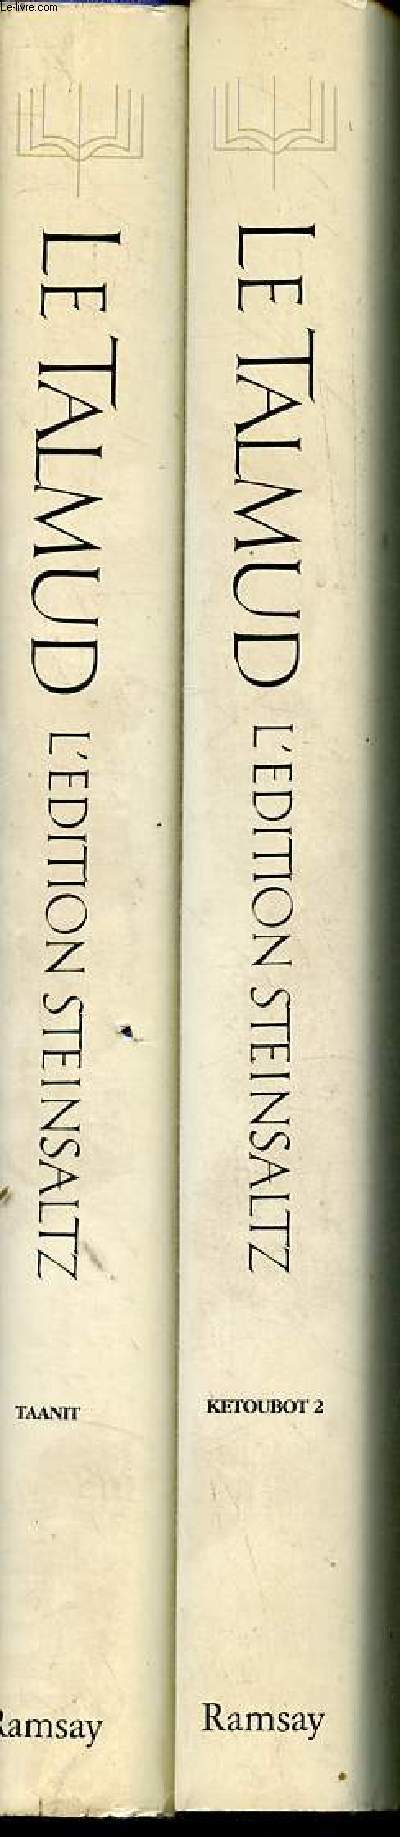 Le Talmud l'dition Steinsaltz - 2 volumes - Volume 1 : Taanit - Volume 2 : Ketoubot.